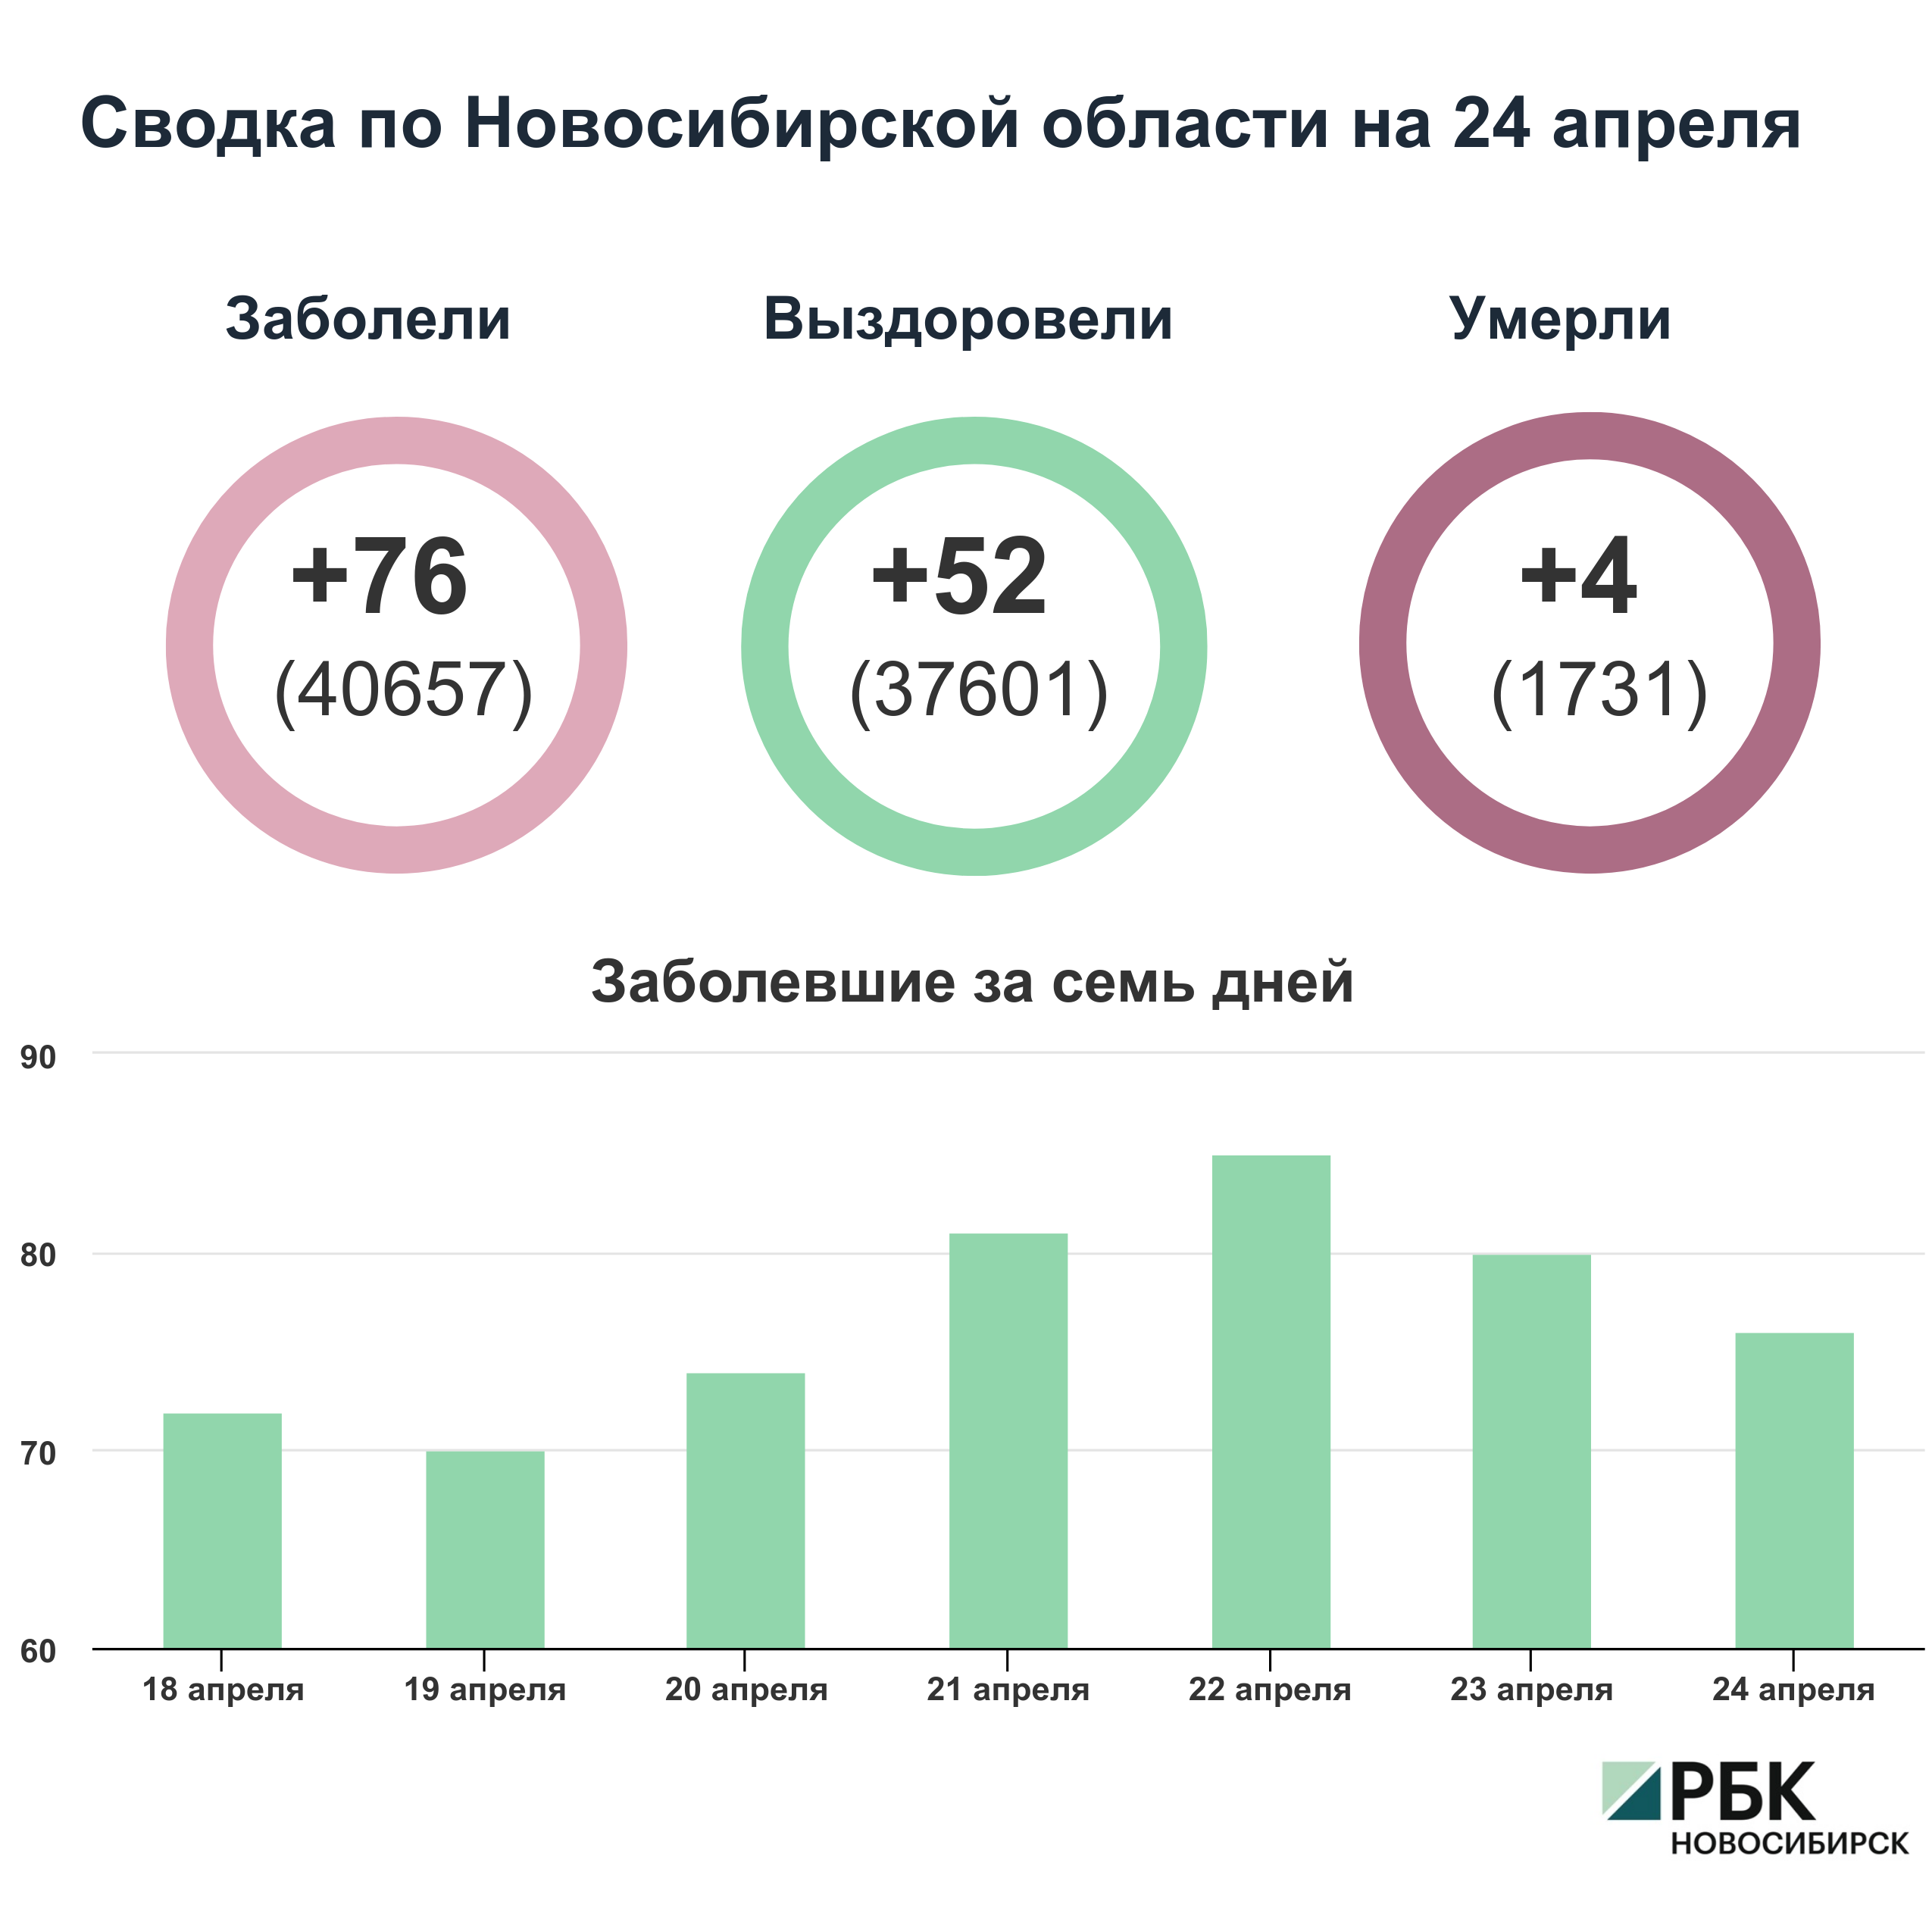 Коронавирус в Новосибирске: сводка на 24 апреля